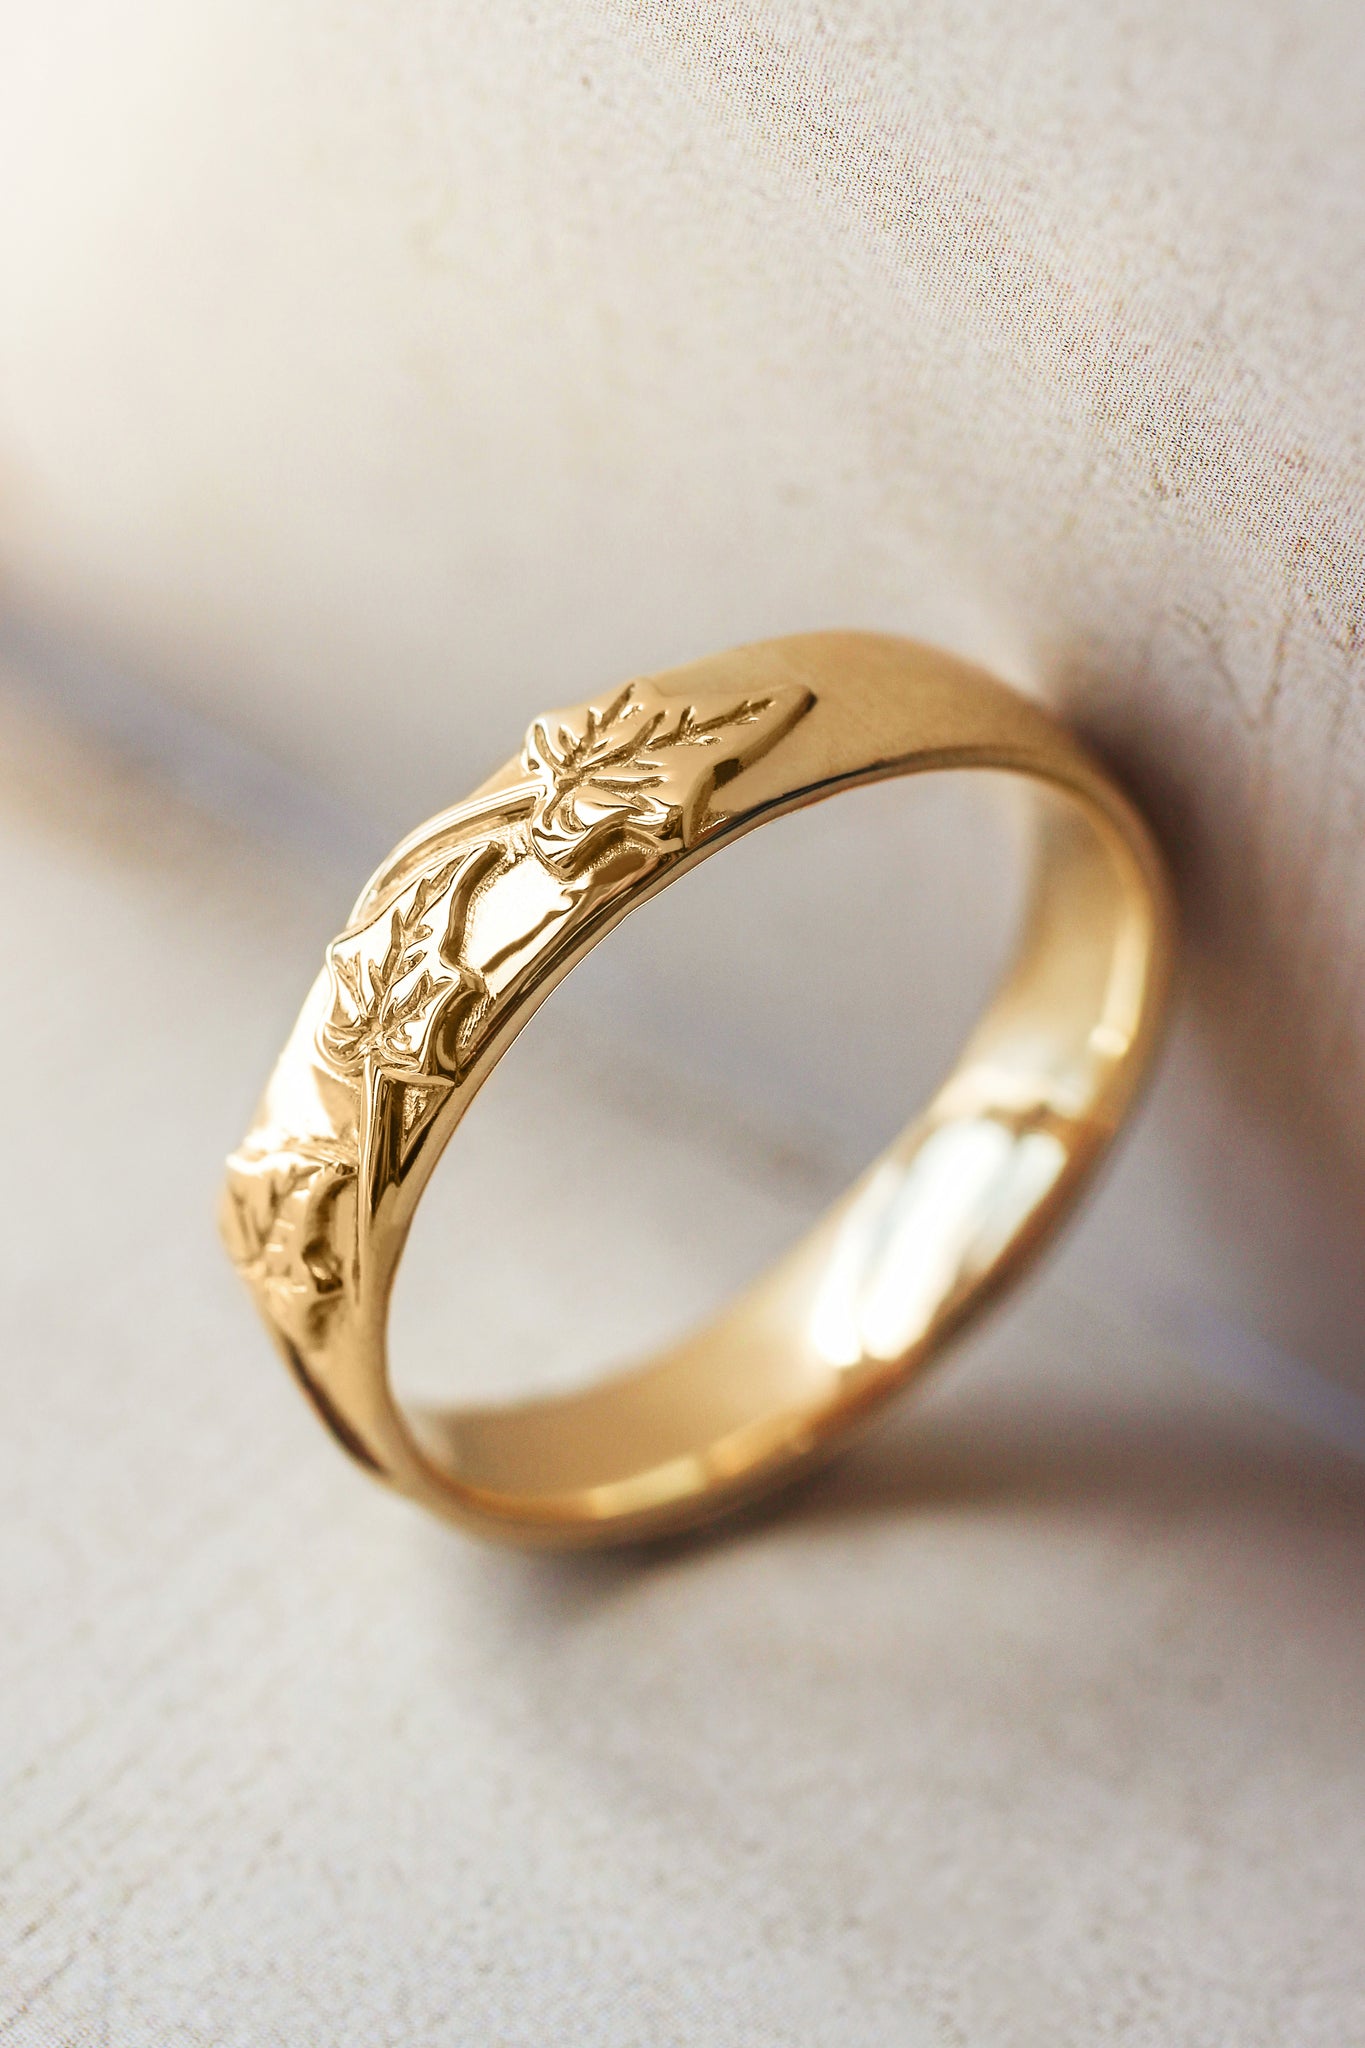 Men's wedding band, ivy leaves ring - Eden Garden Jewelry™